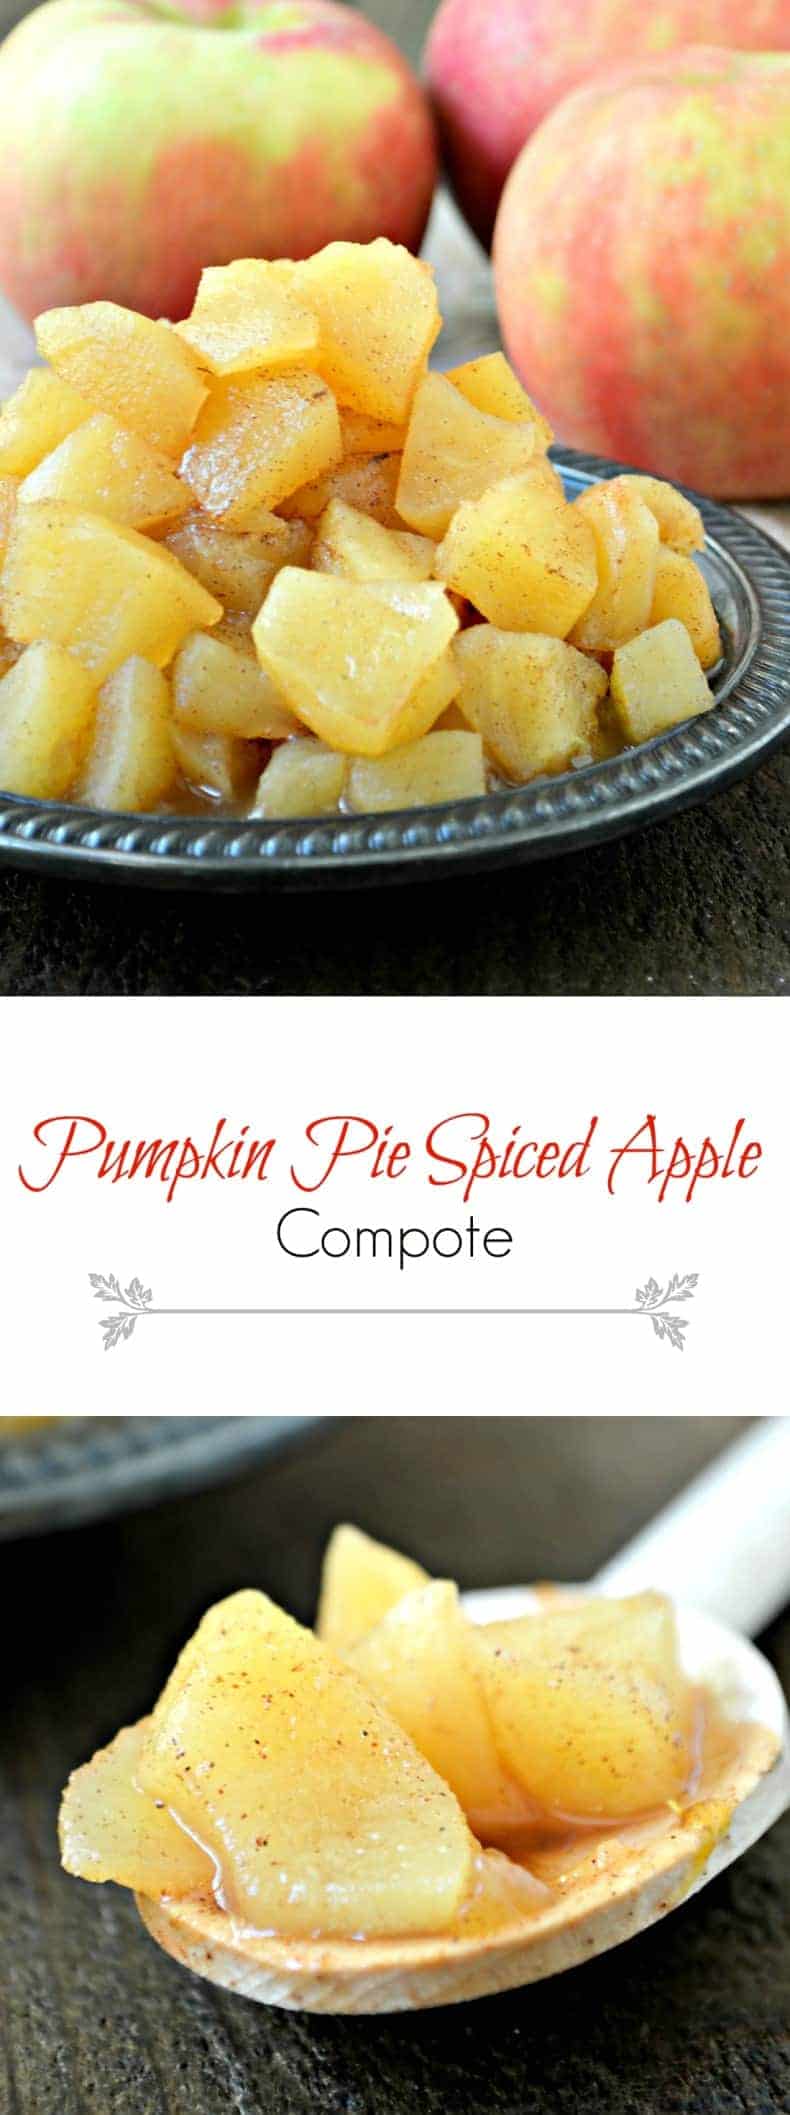 pumpkin pie spiced apple compote recipe